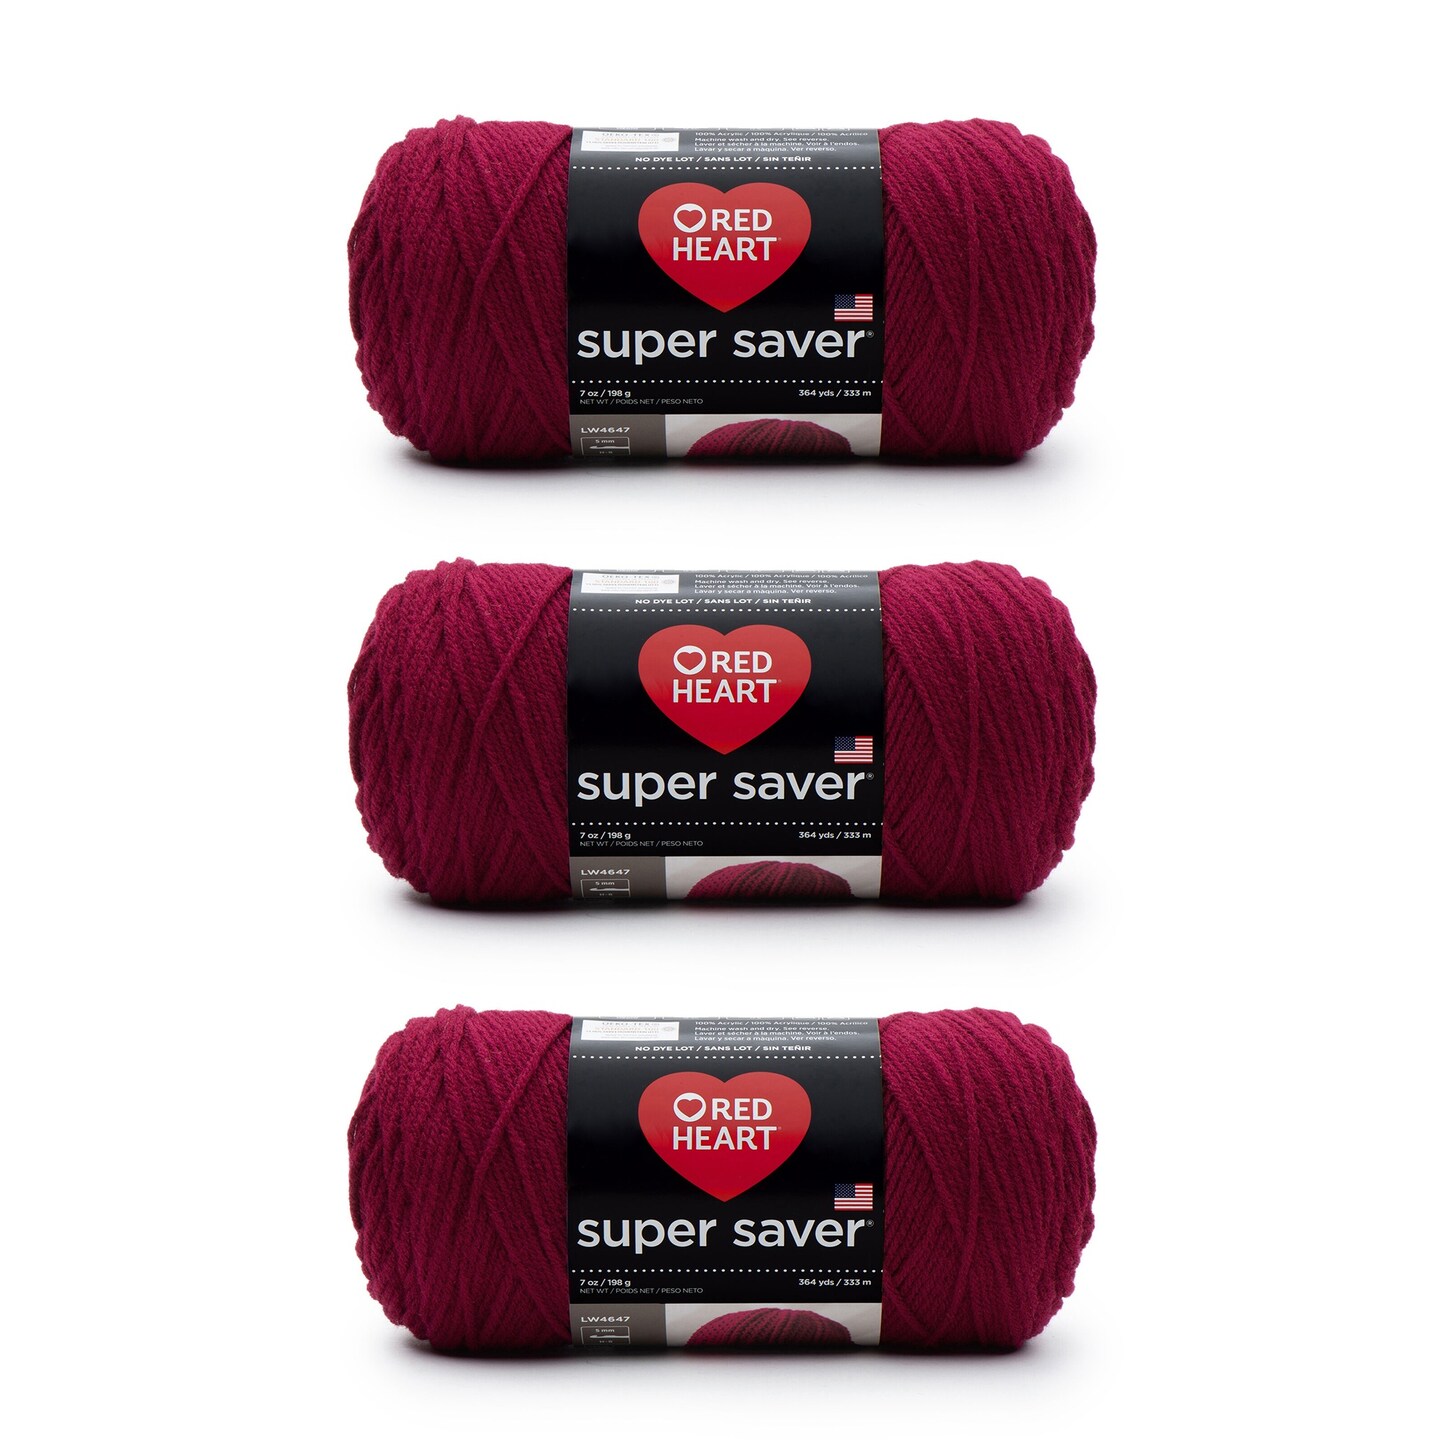 Red Heart Super Yarn - 3 Pack 198g/7oz - Acrylic - 4 Medium (Worsted) - 364 Yards - Knitting/Crochet Michaels